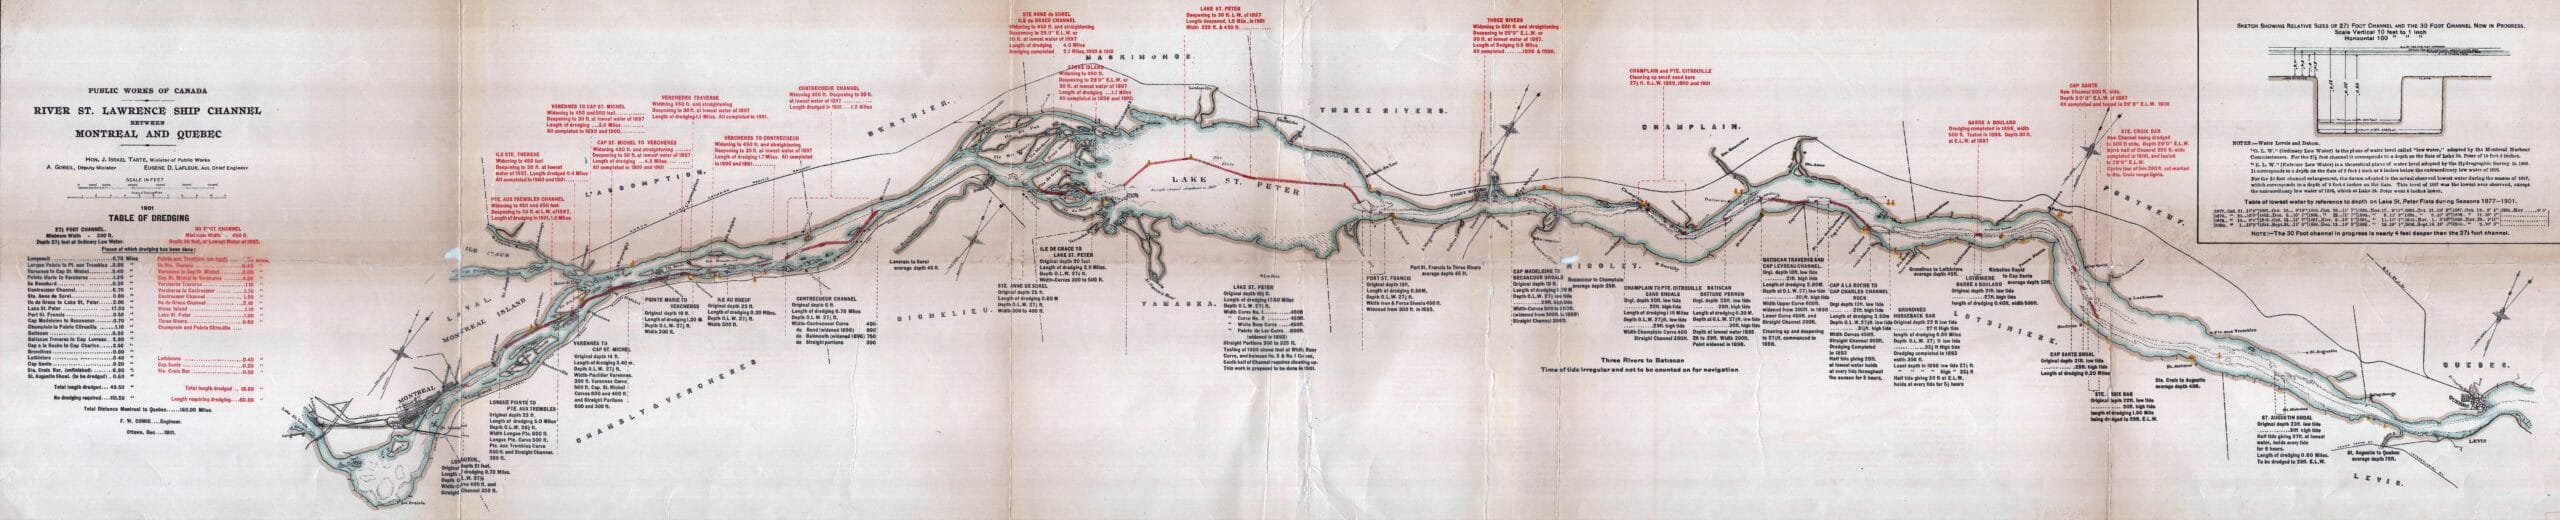 Carte « River St. Lawrence ship Channel between Montreal and Quebec » publiée par le « Department of Public Works » du « Government of Canada », 1901